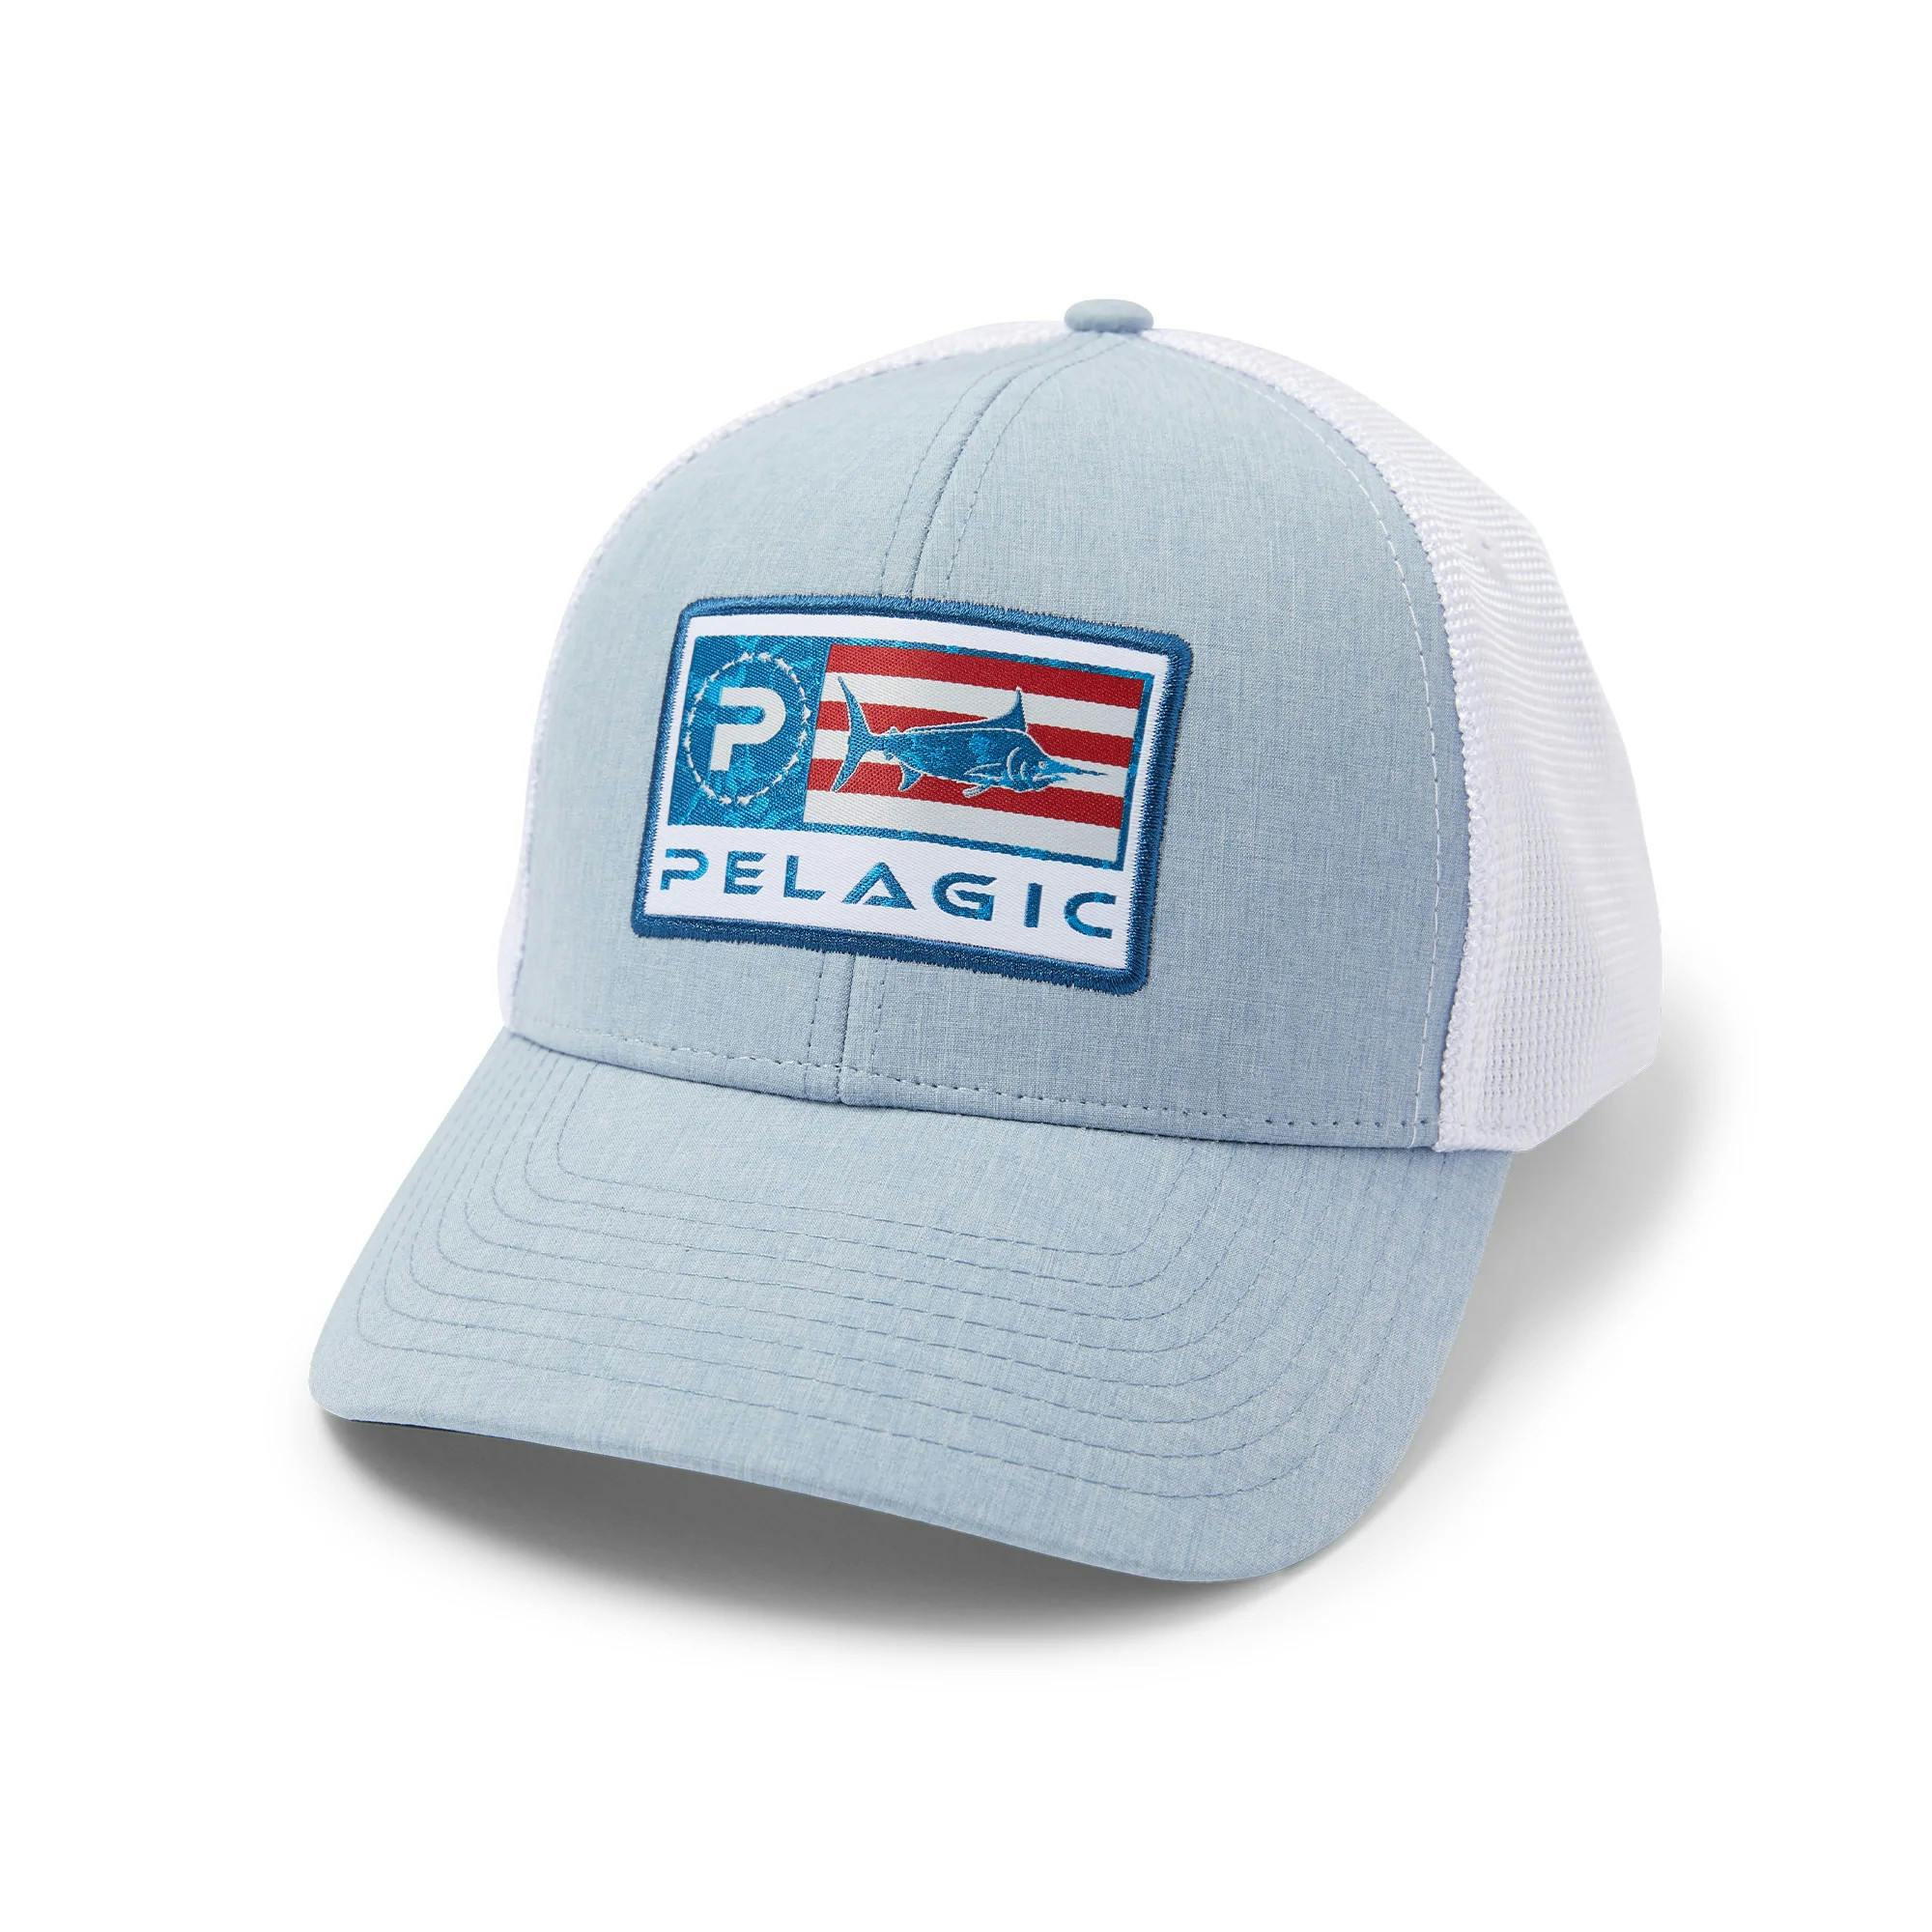 Pelagic Offshore Trucker Hat - DeepSea Americamo Blue Dry View